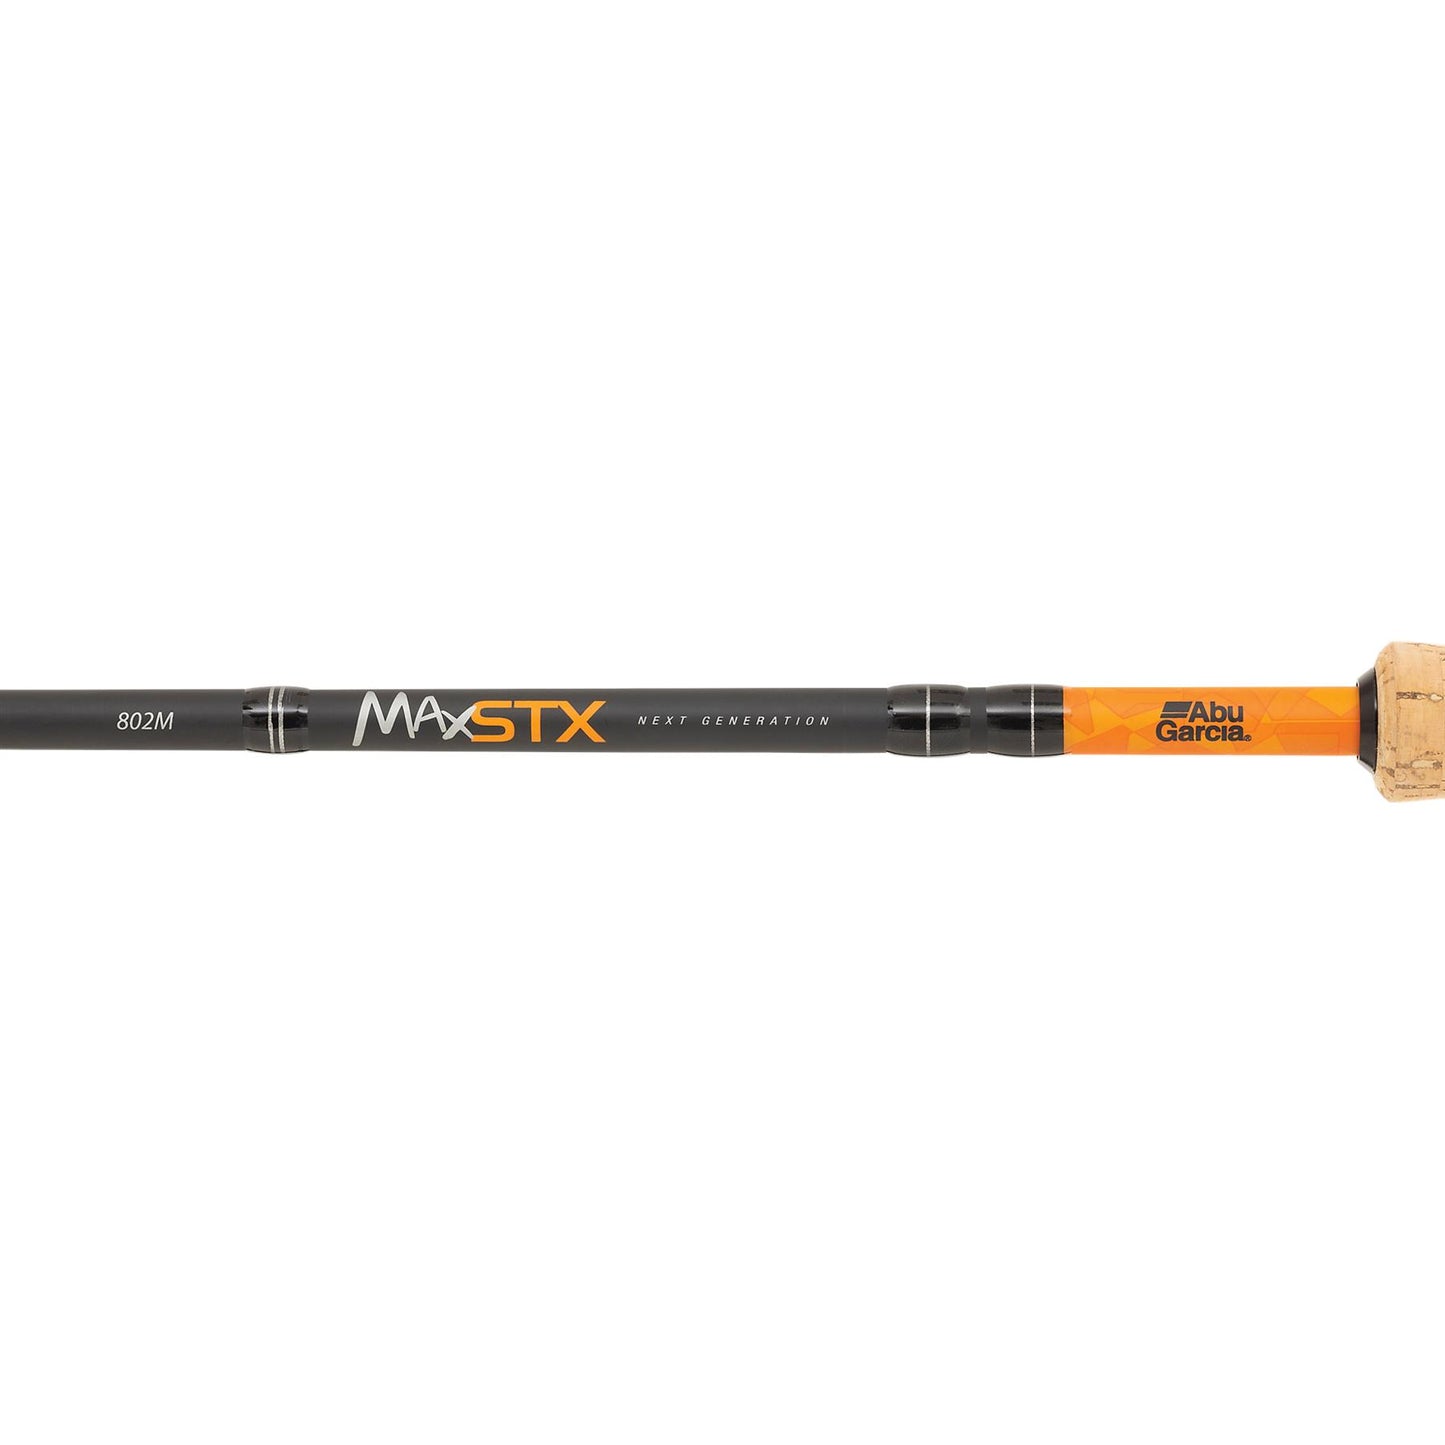 Abu Garcia Max STX Spinning Combo  9'0" 15-40g